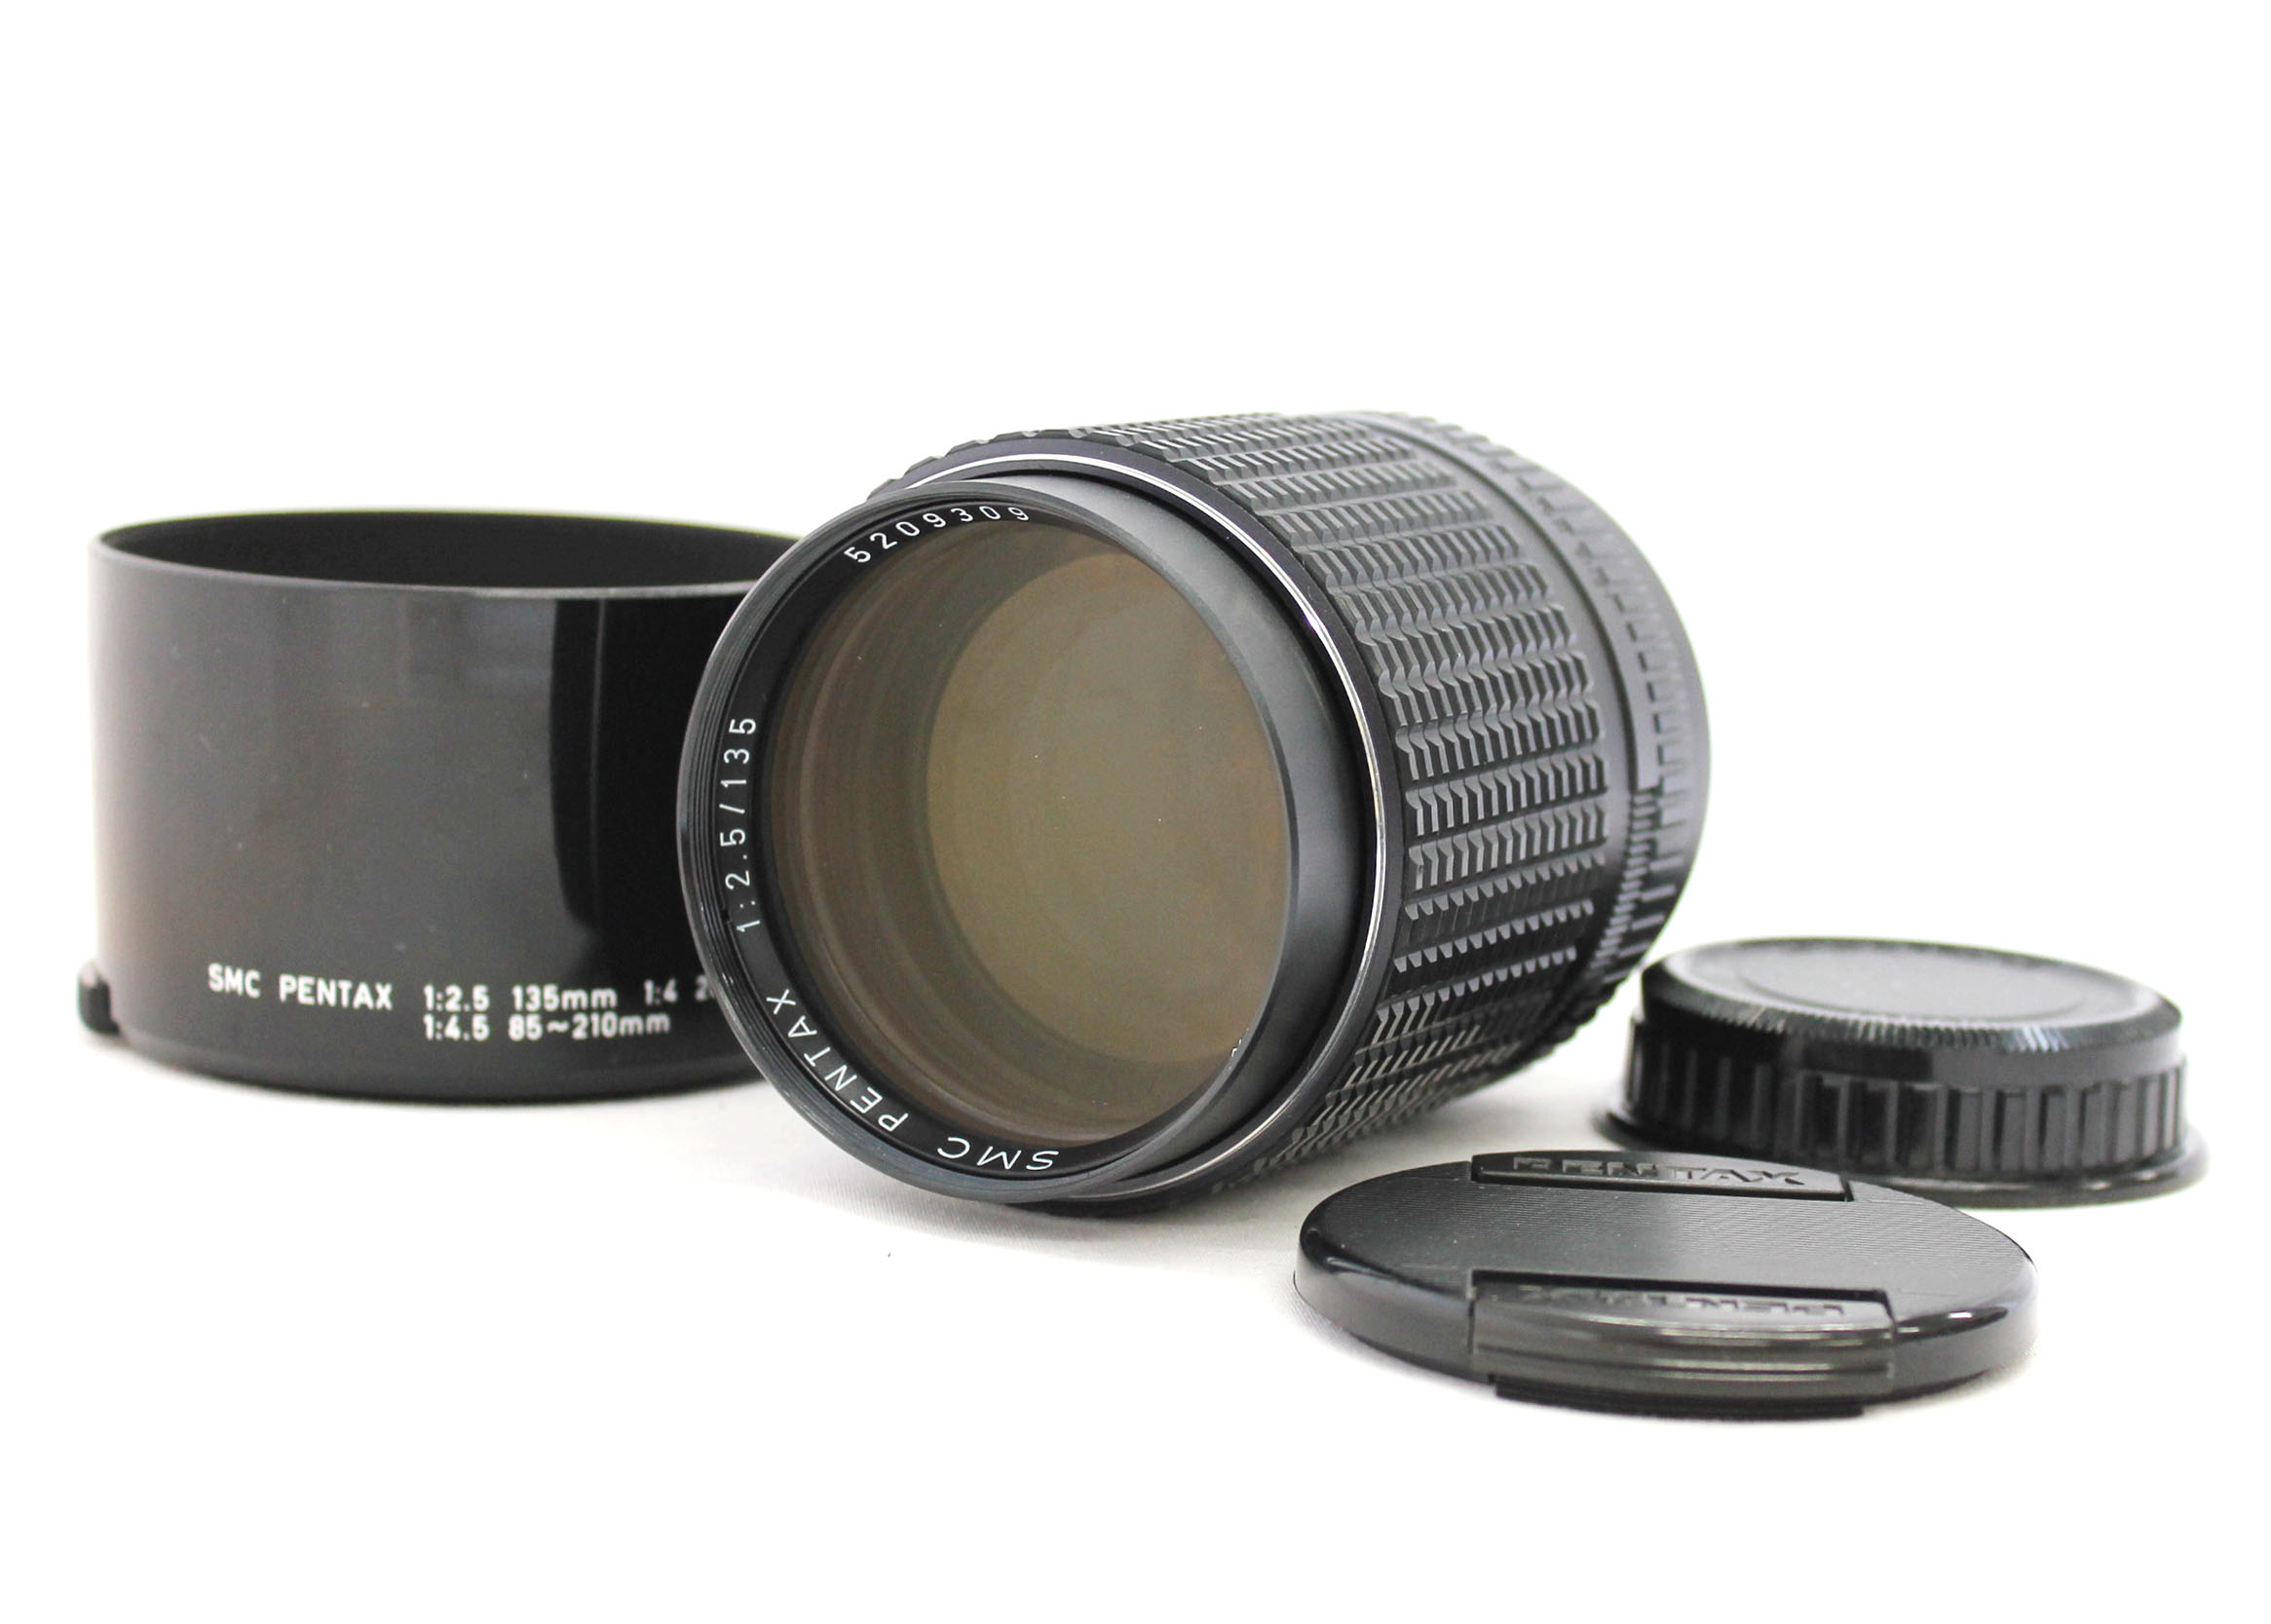 [Near Mint] Pentax SMC PENTAX 135mm F/2.5 MF K Mount Lens with Hood from Japan 